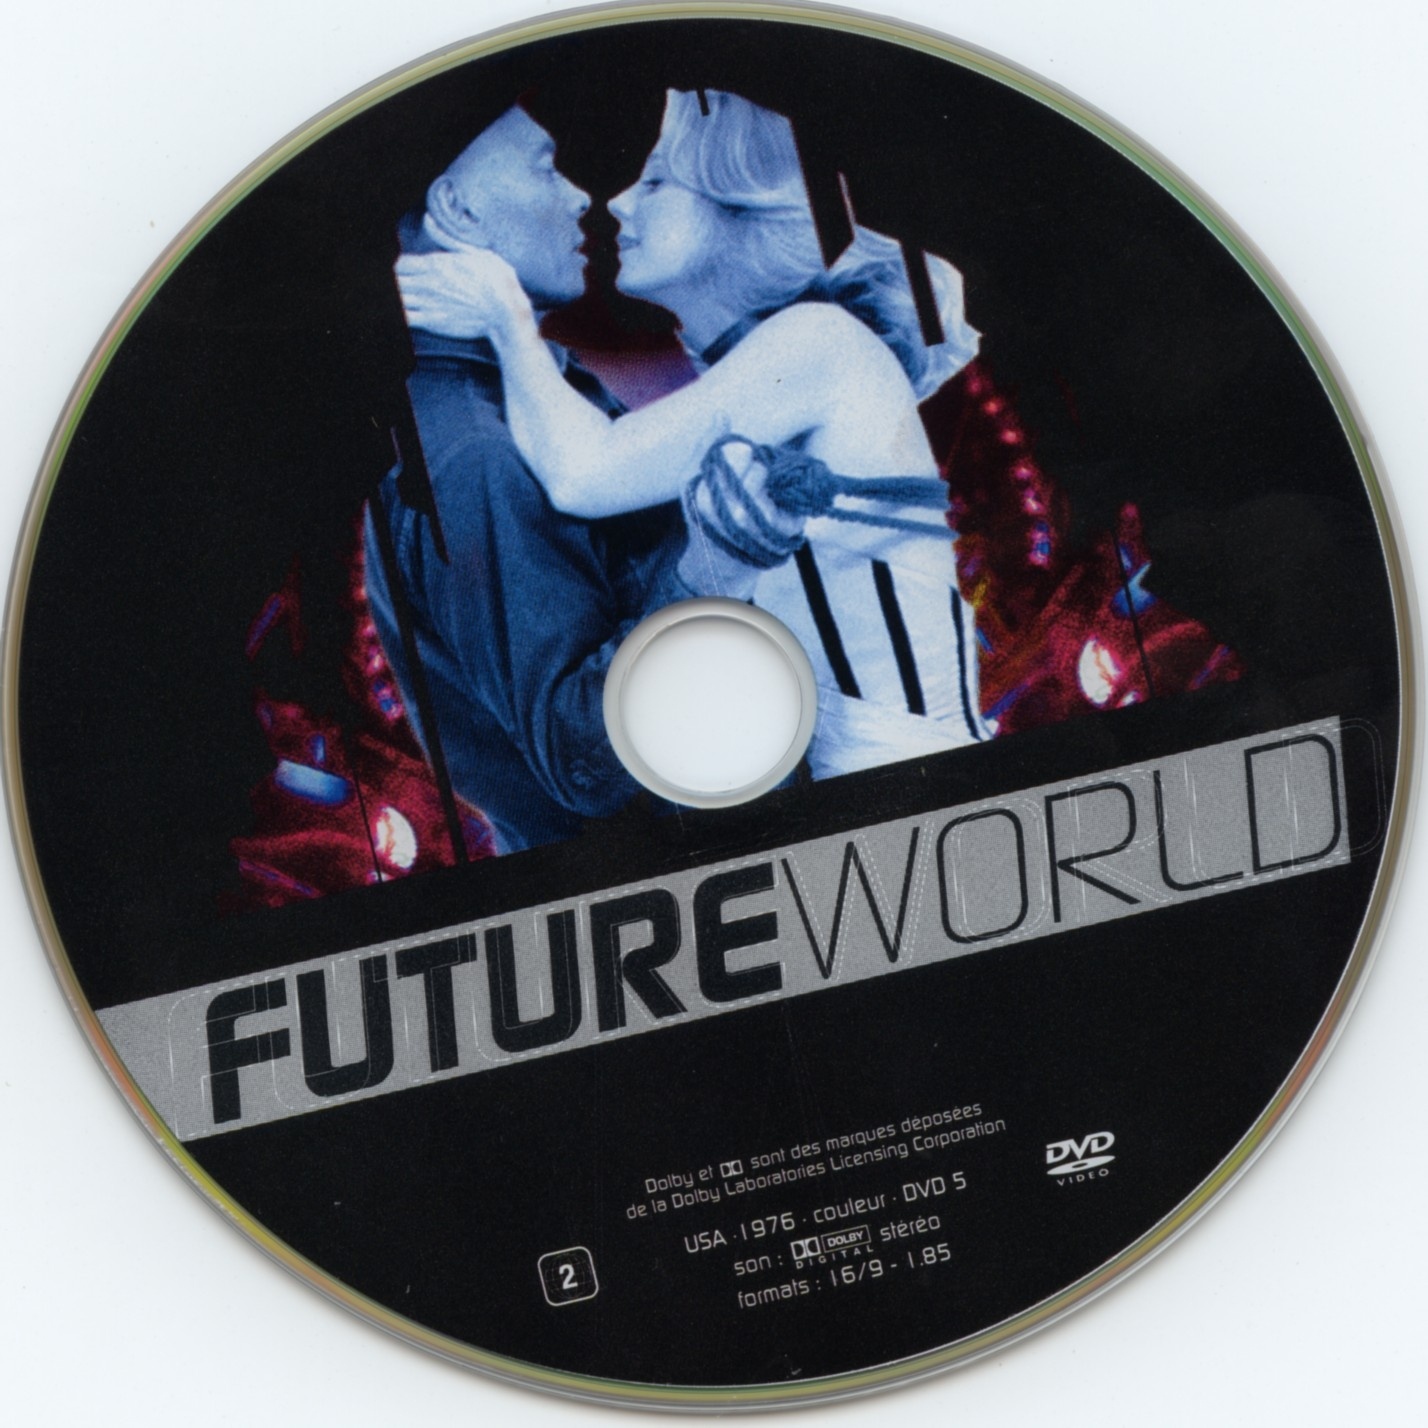 Future world